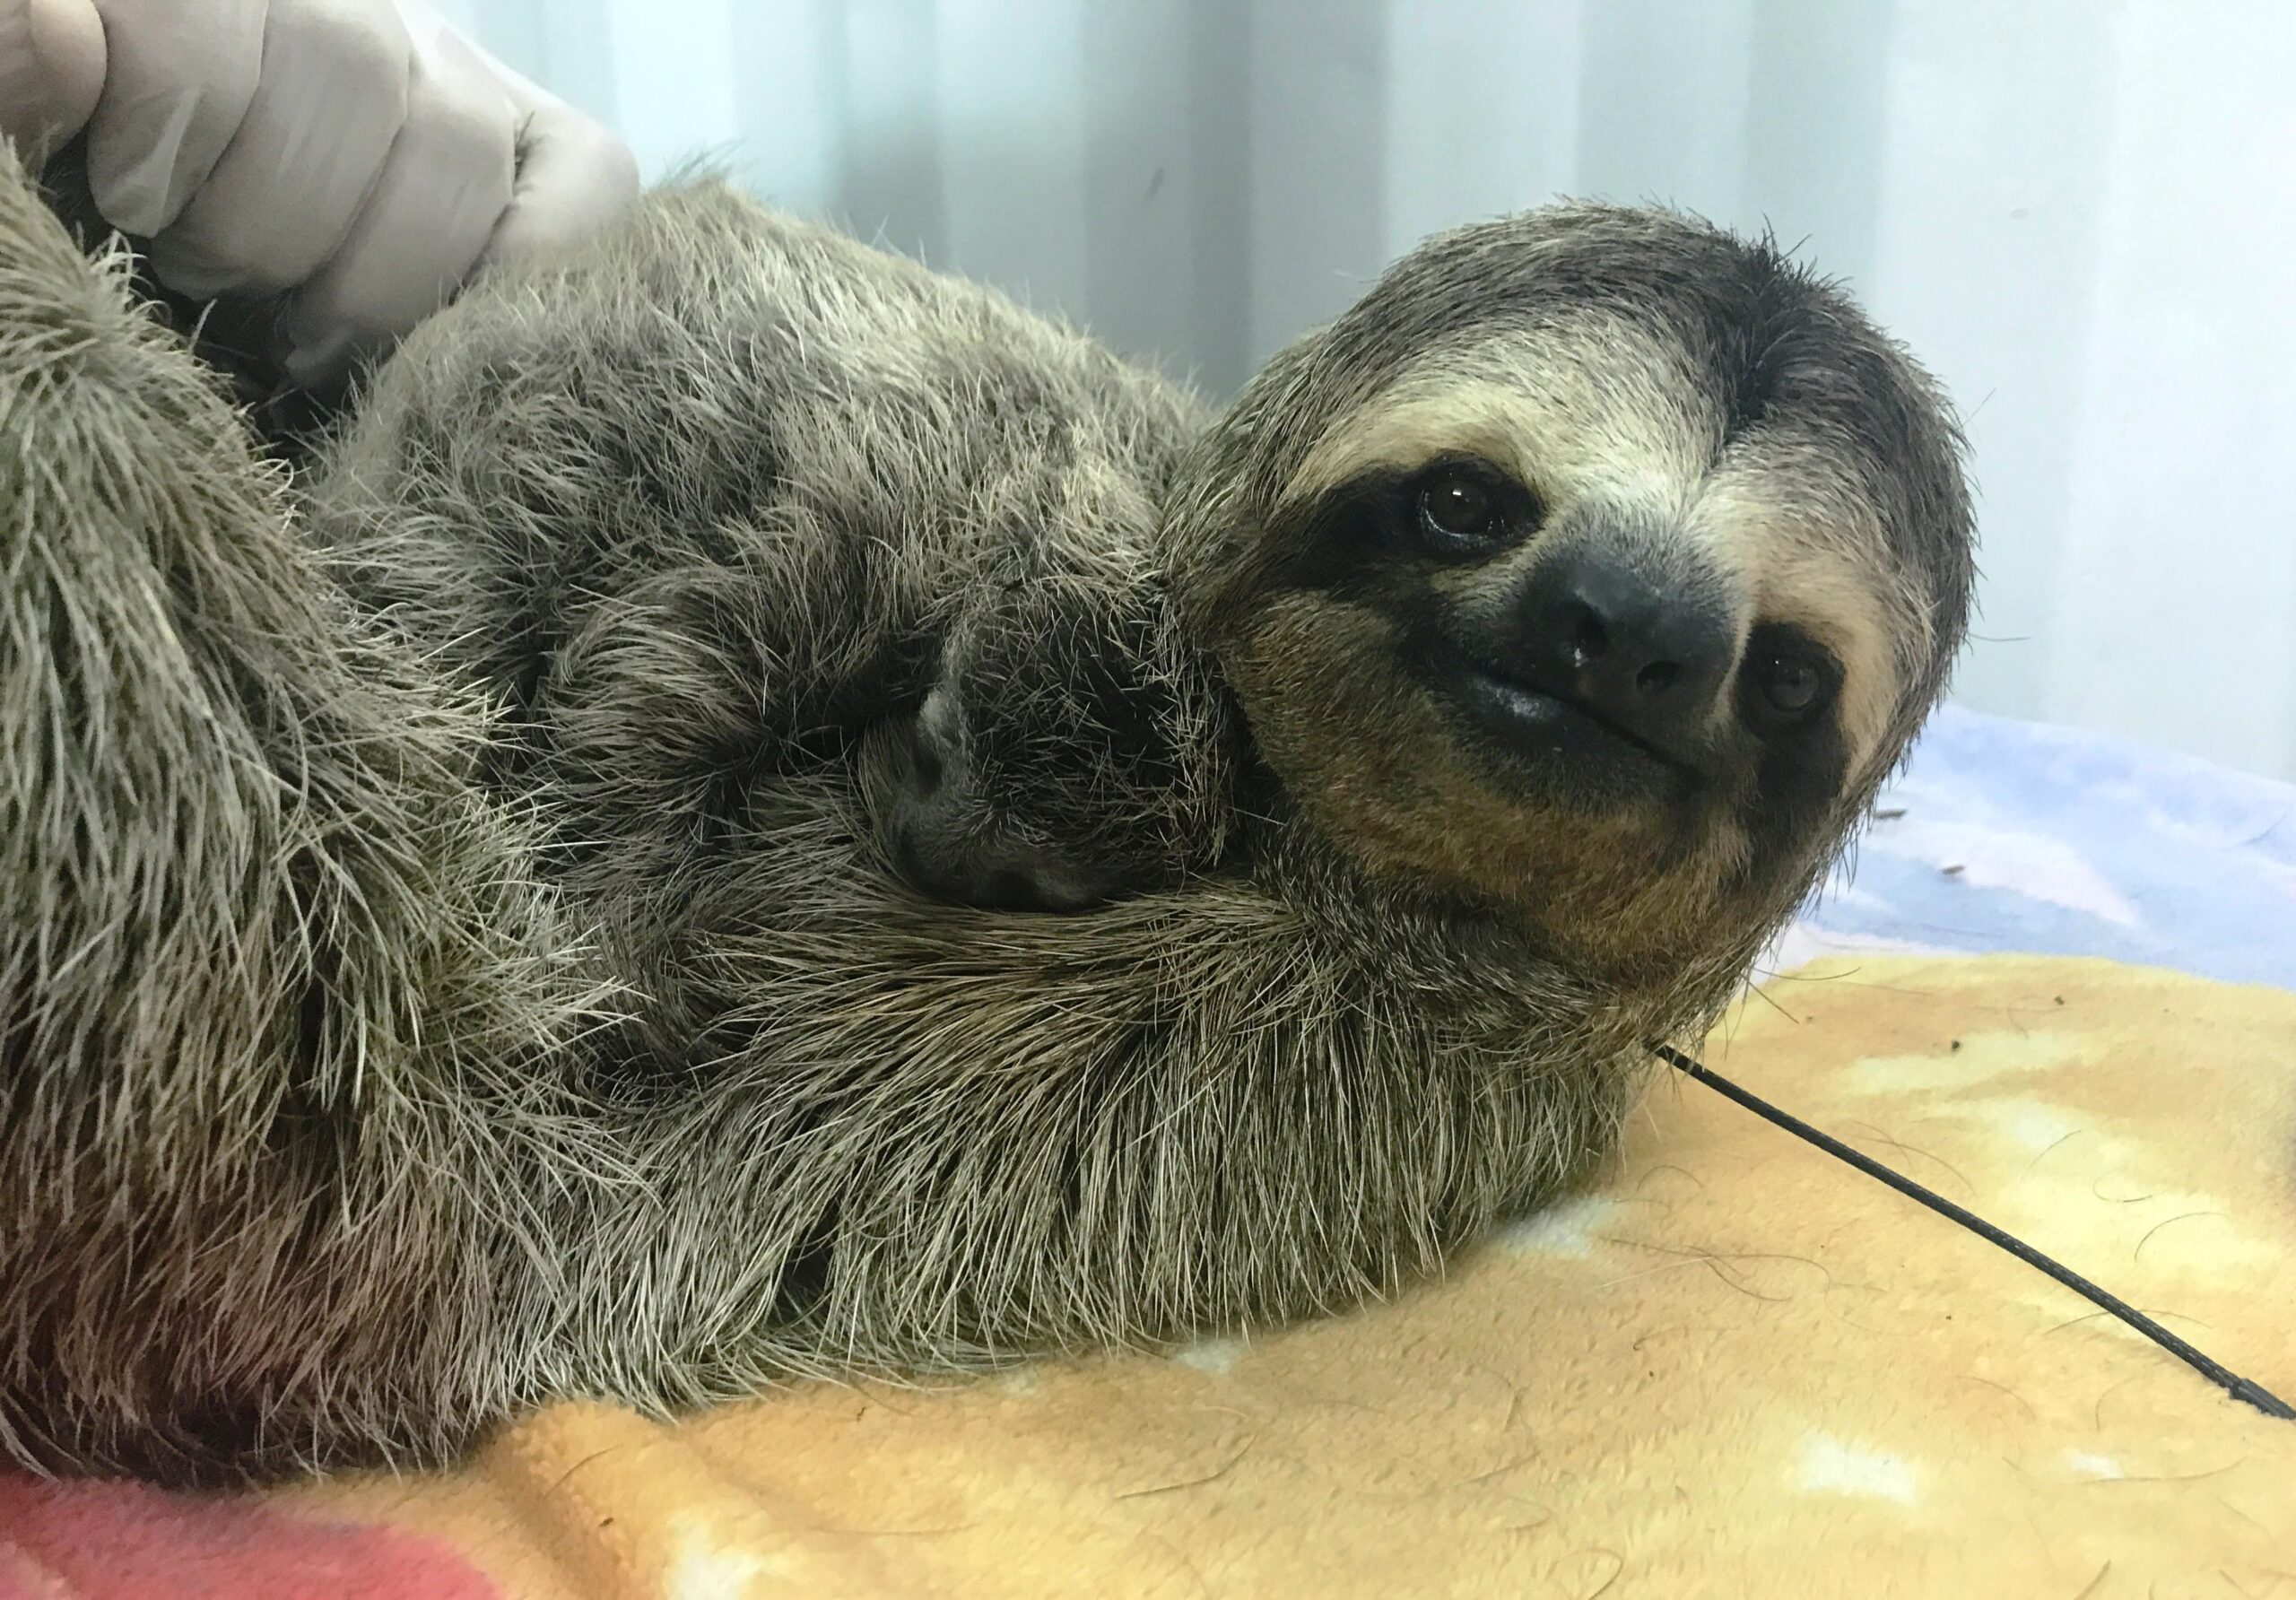 Mama sloth with baby (Photo: Amanda Chambers / Colleen Lawrence)